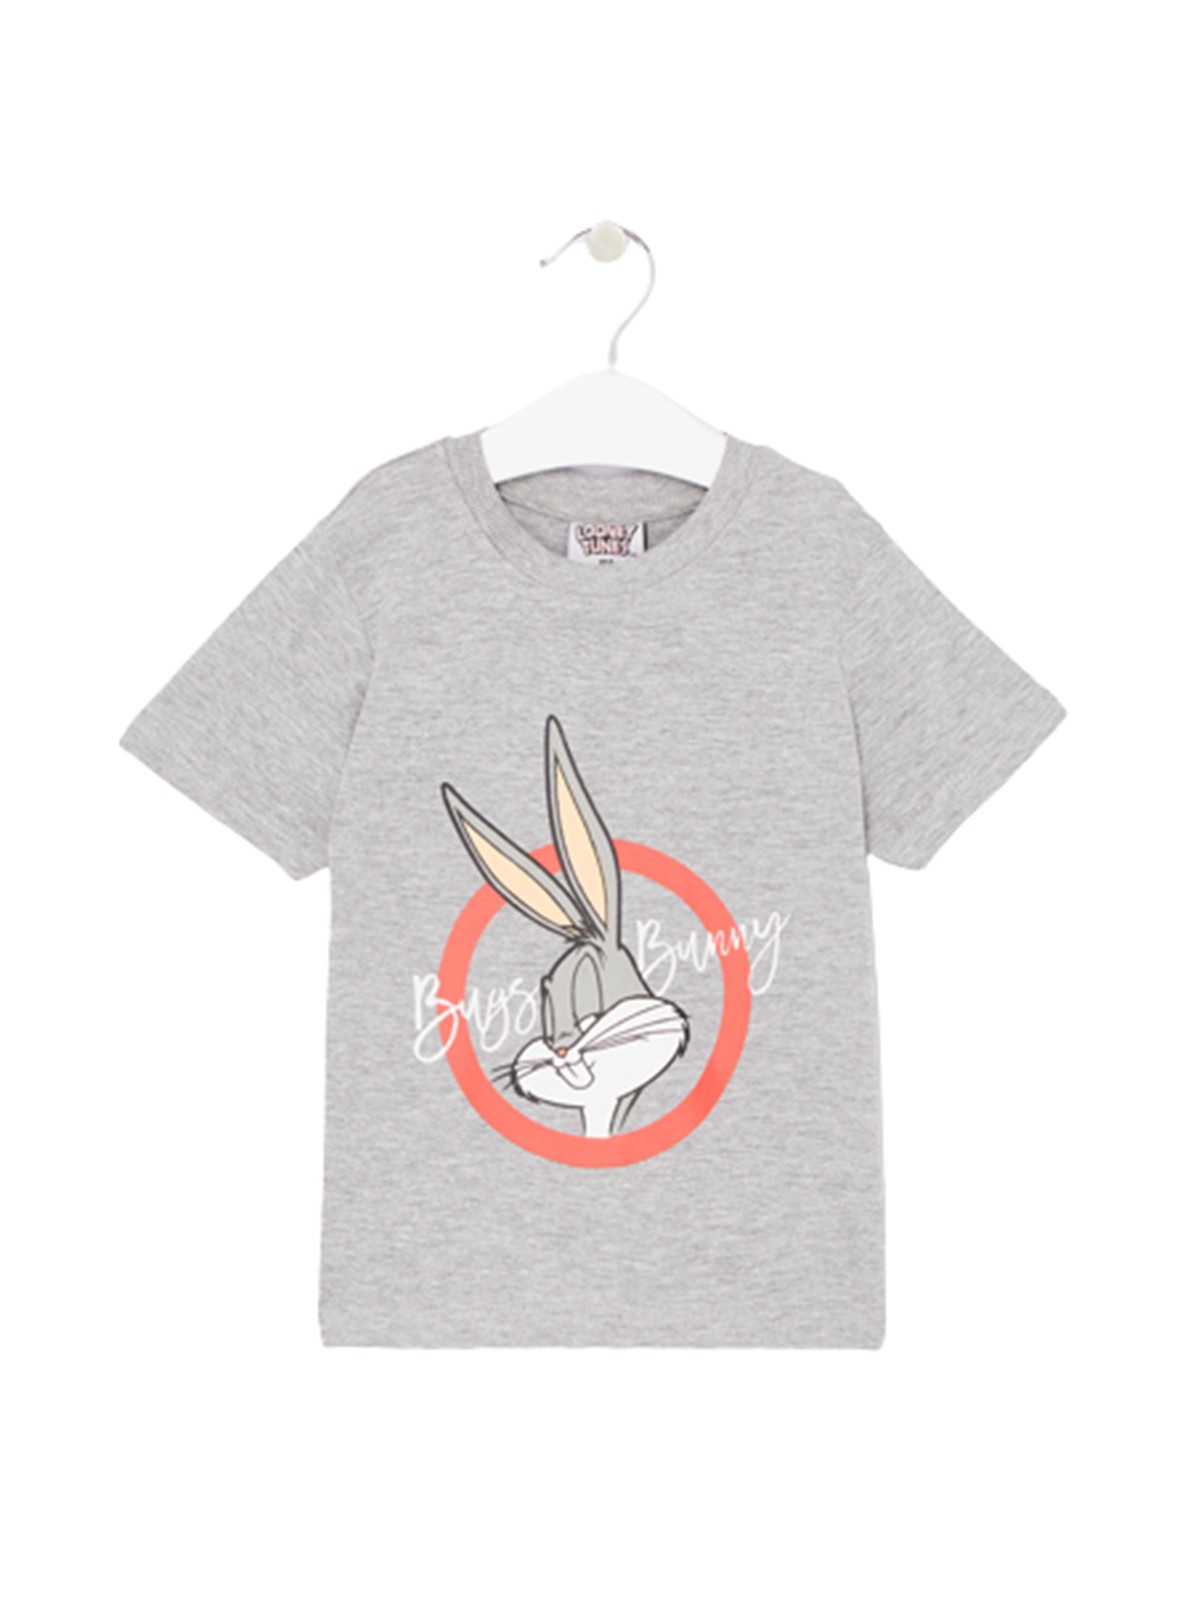 T-shirt Bugs Bunny